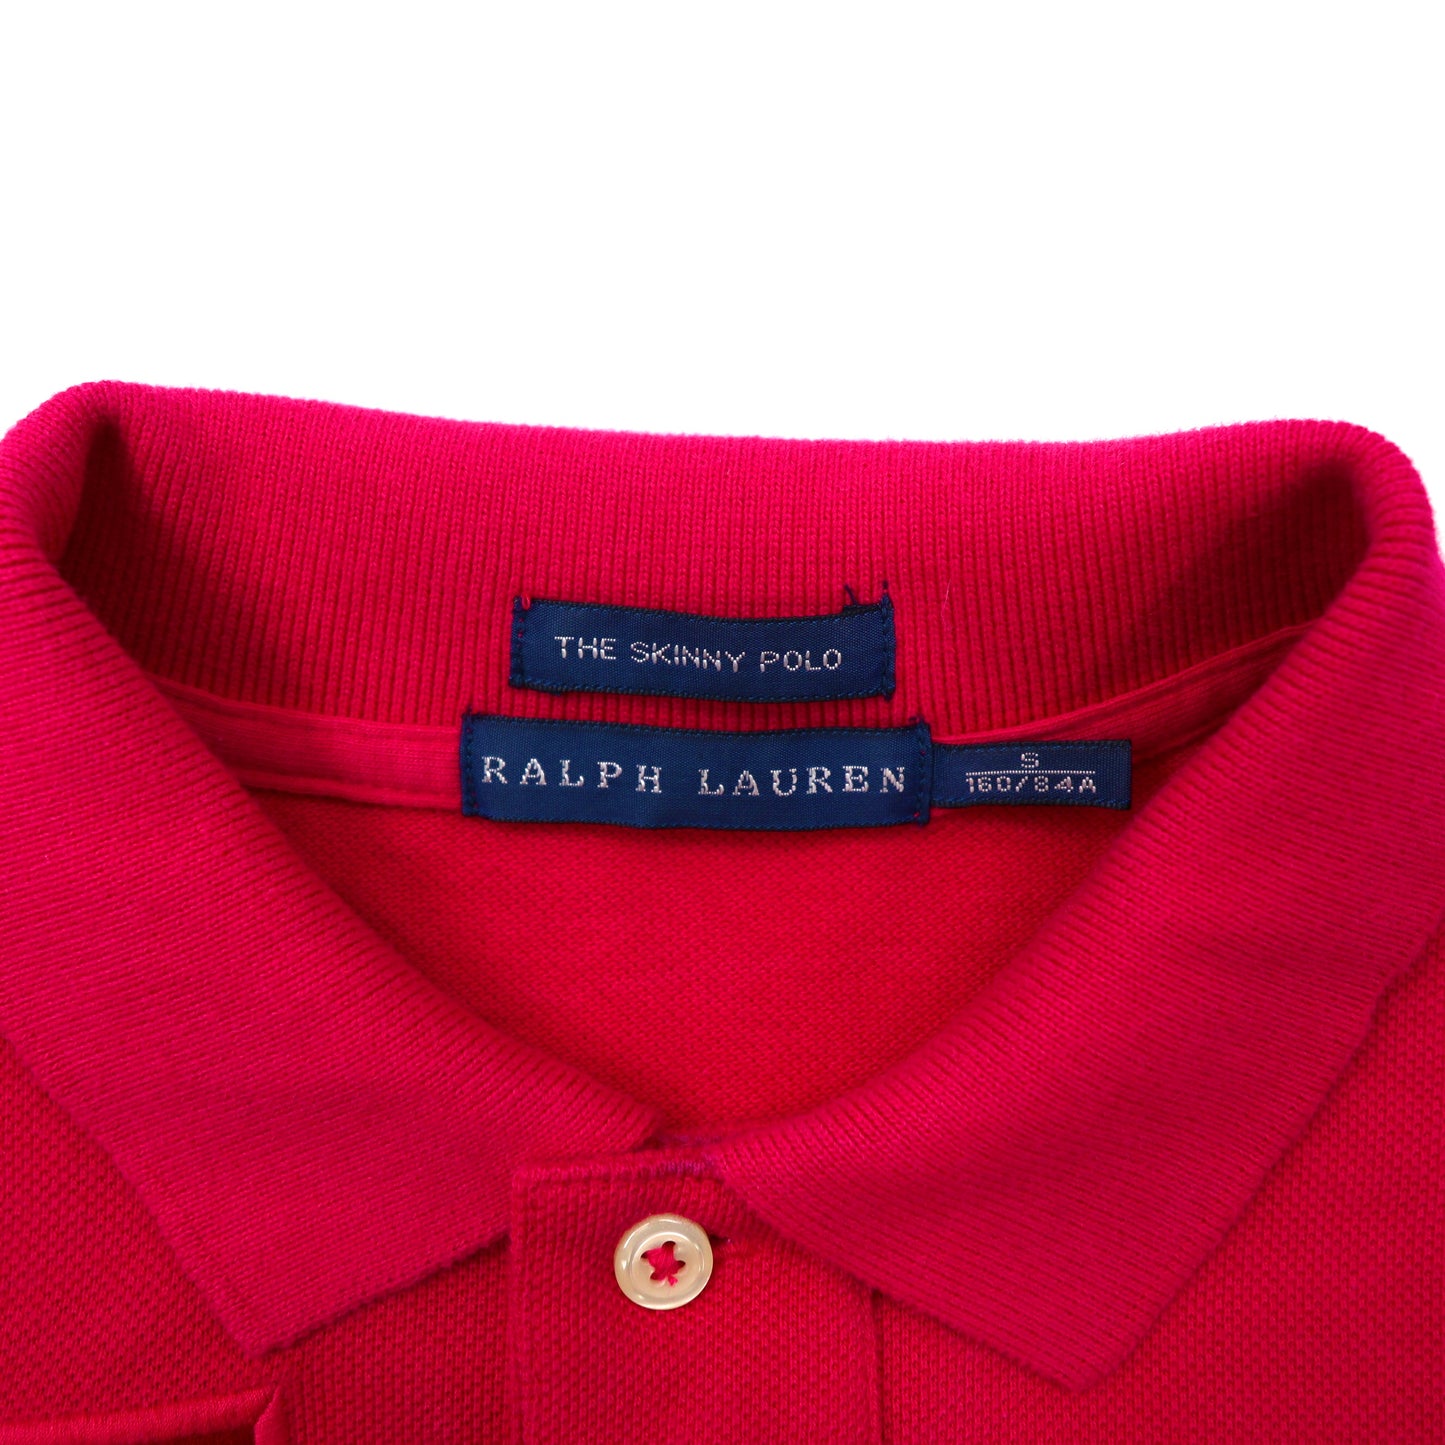 RALPH  LAUREN ポロシャツ S ピンク コットン ビッグポニー刺繍 ナンバリング USA 星条旗 刺繍